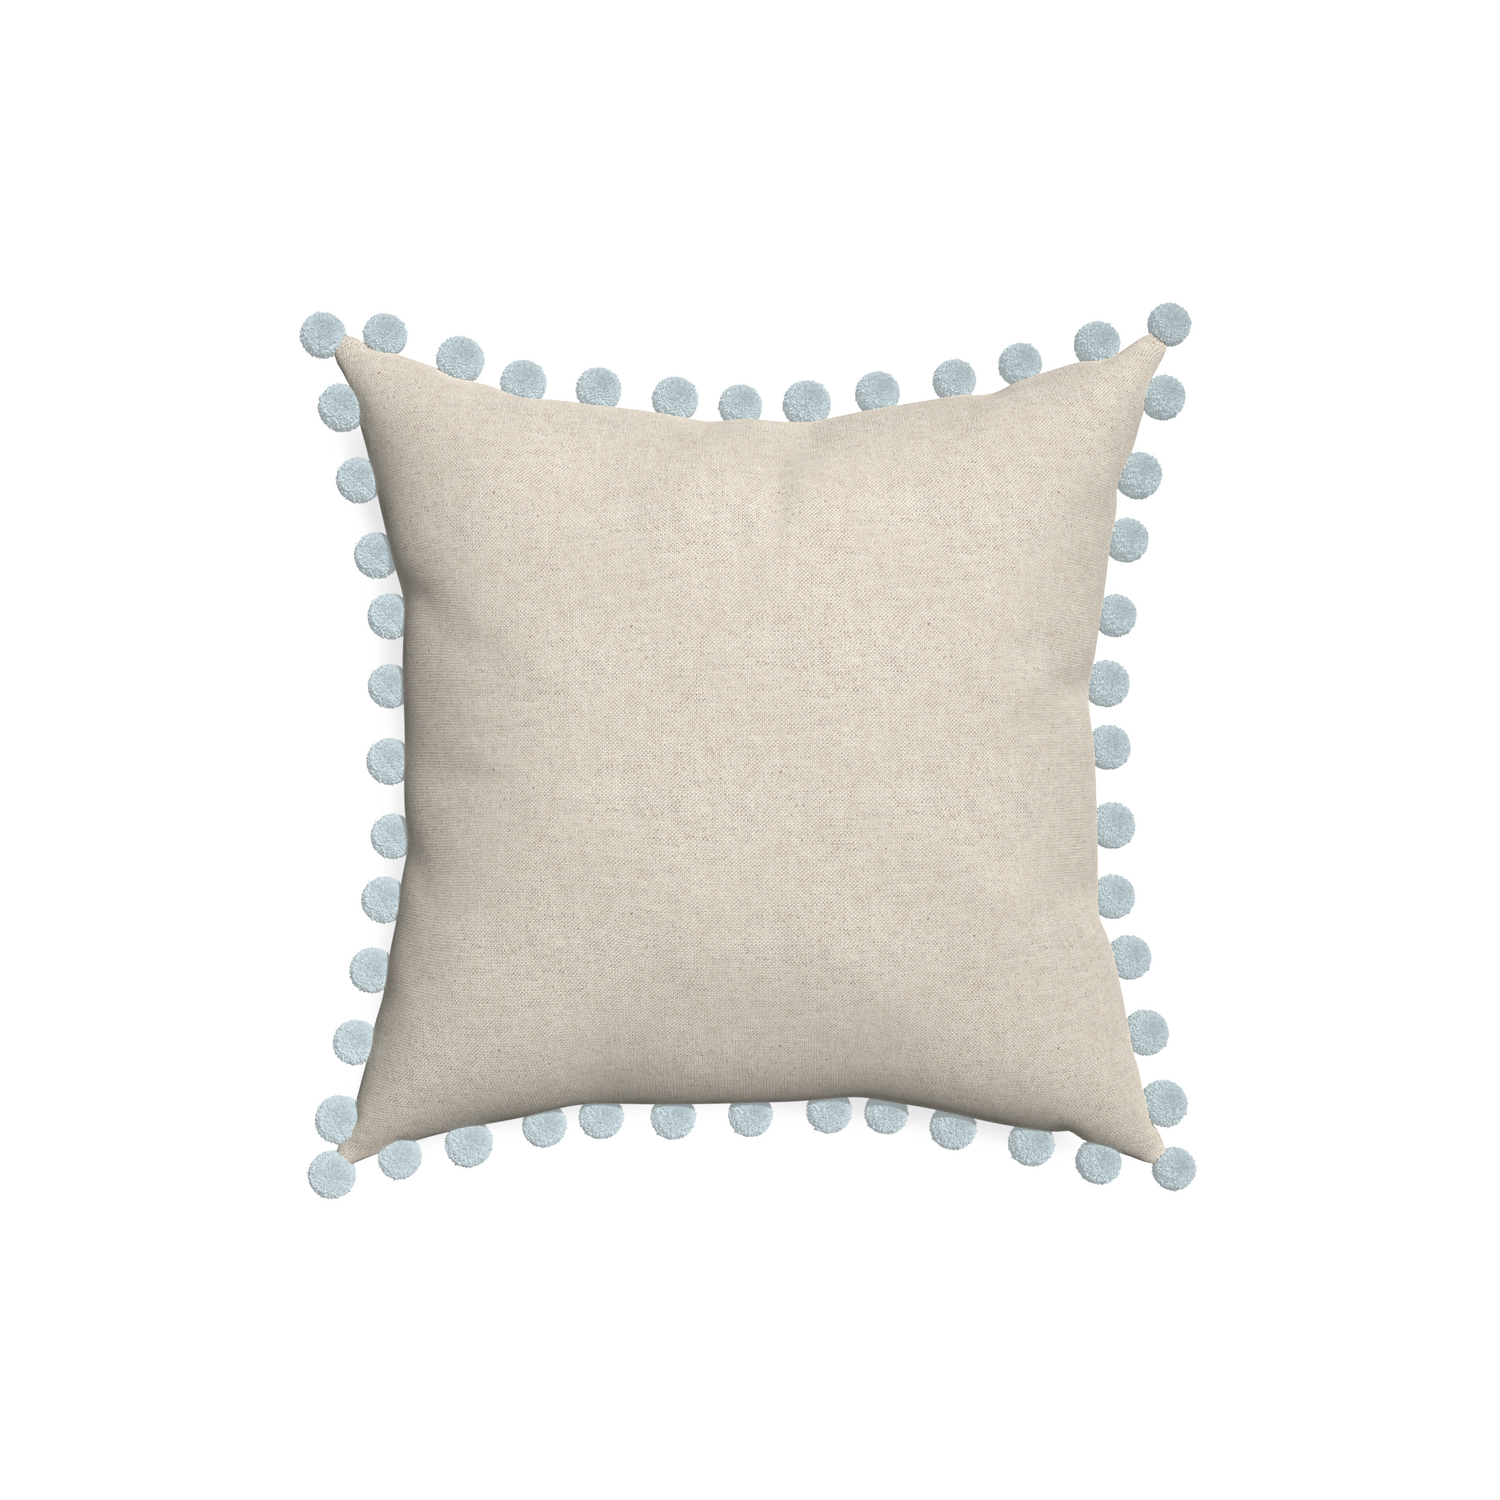 18-square oat custom pillow with powder pom pom on white background